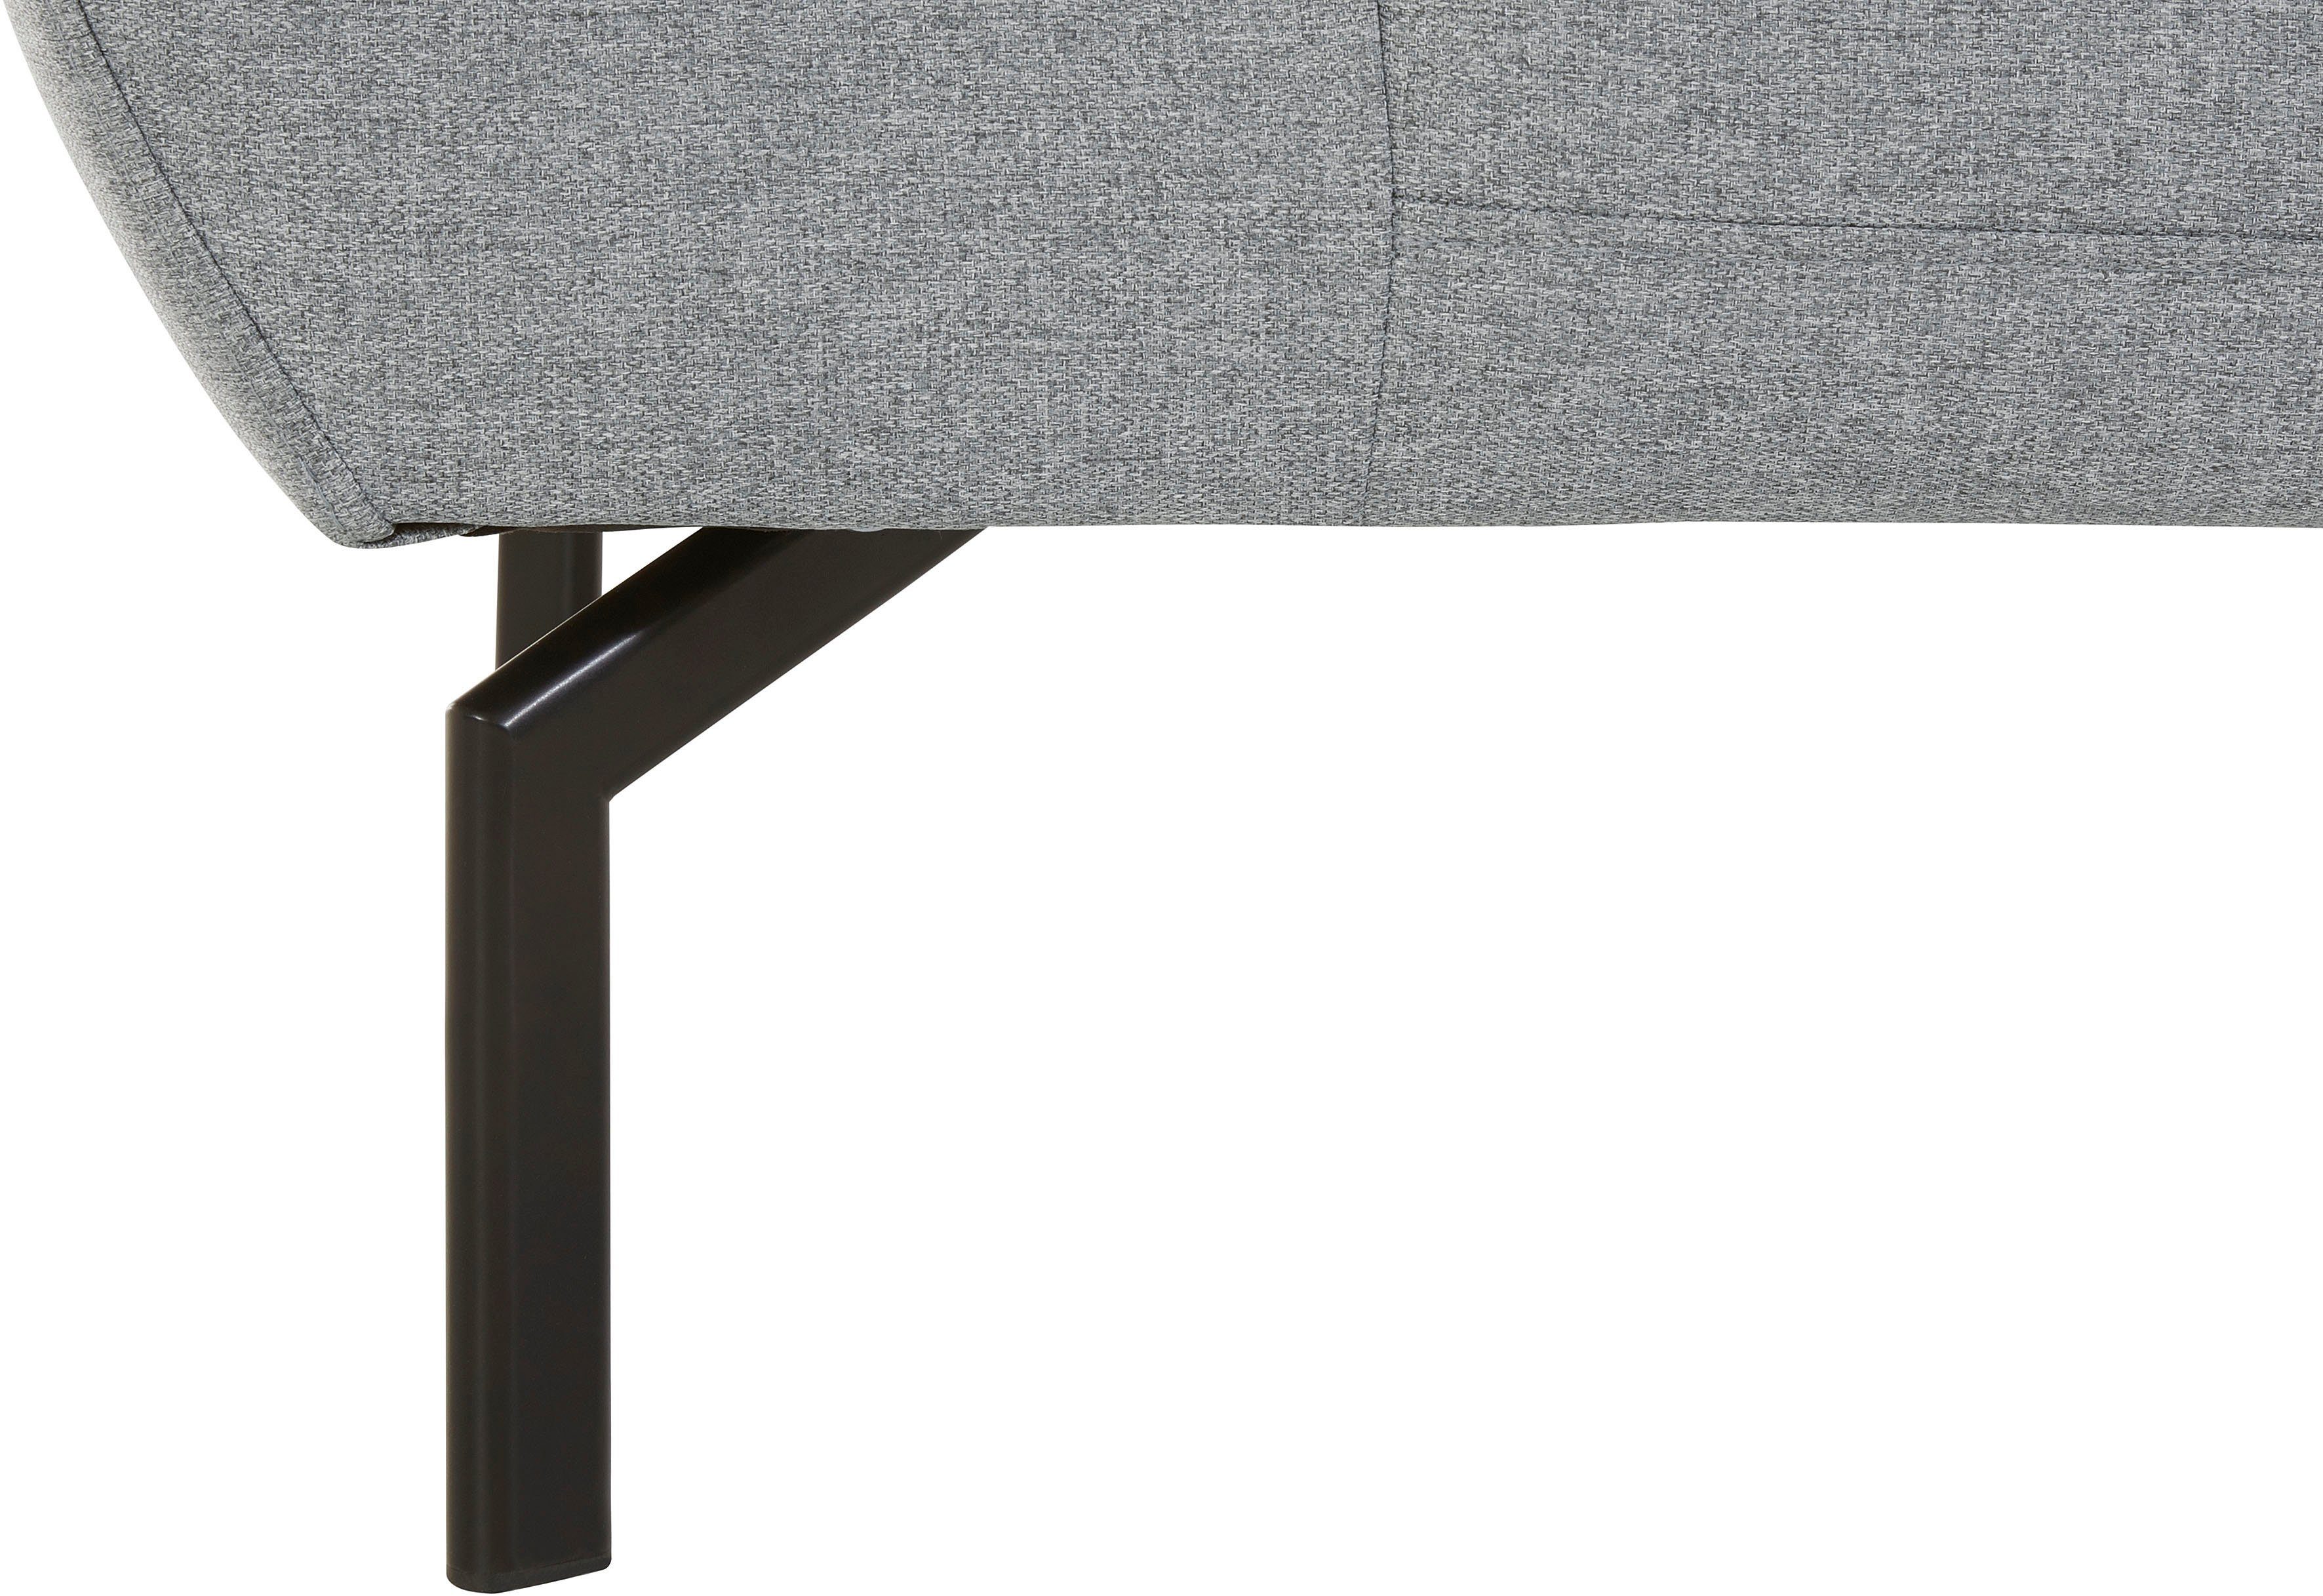 Places of Sessel Trapino Lederoptik Style mit in wahlweise Rückenverstellung, Luxus, Luxus-Microfaser